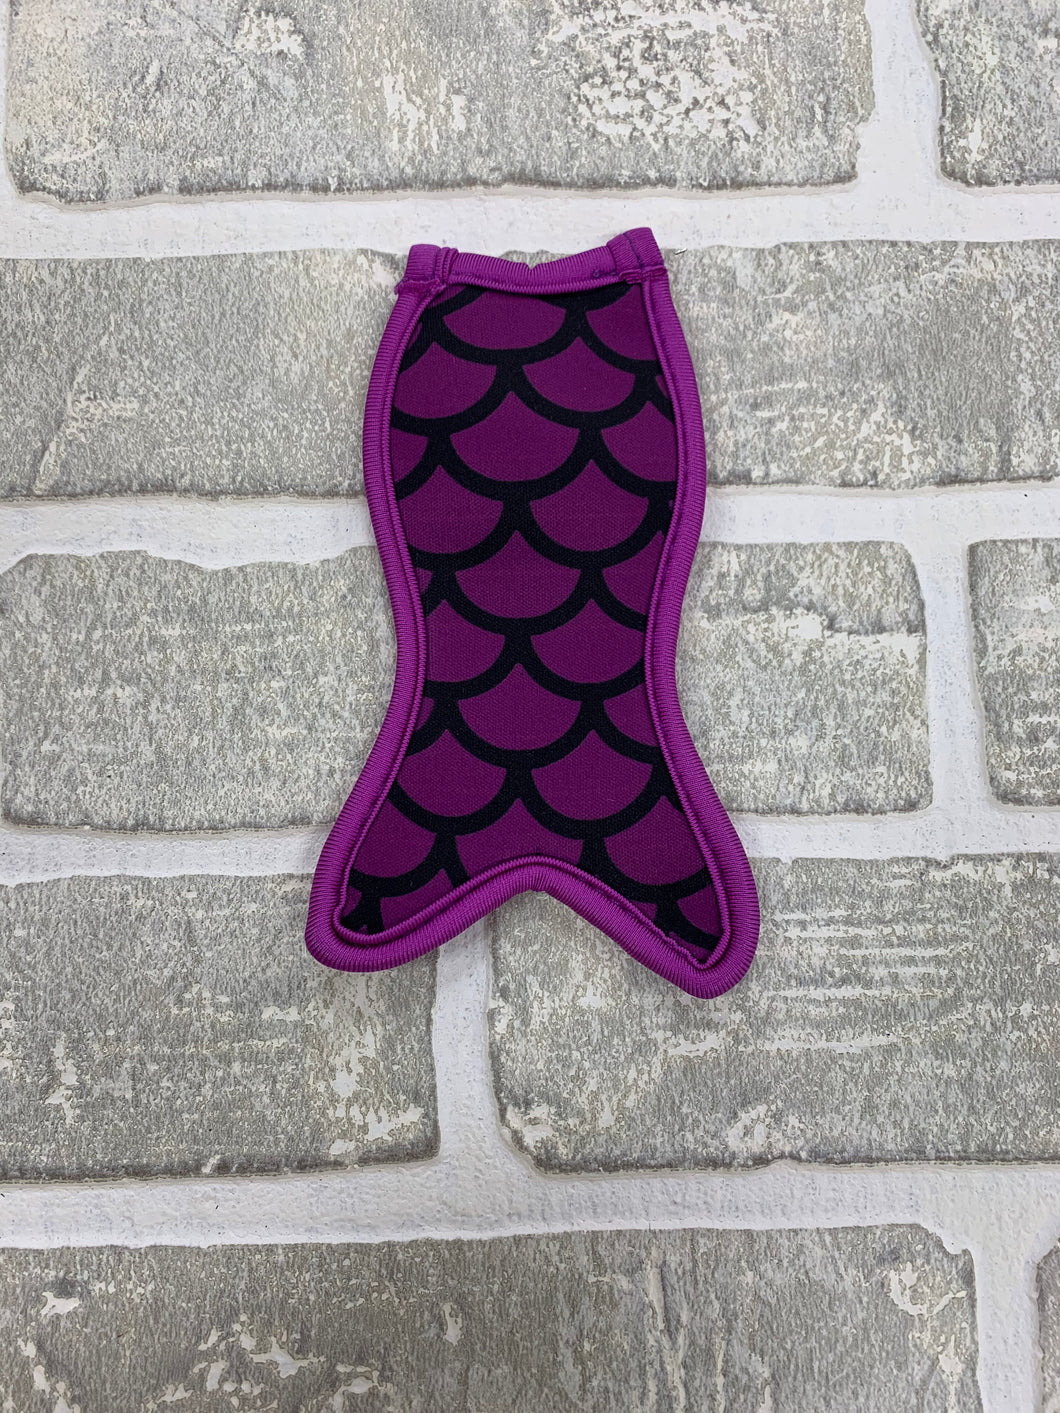 Purple and black mermaid popsicle holder blanks